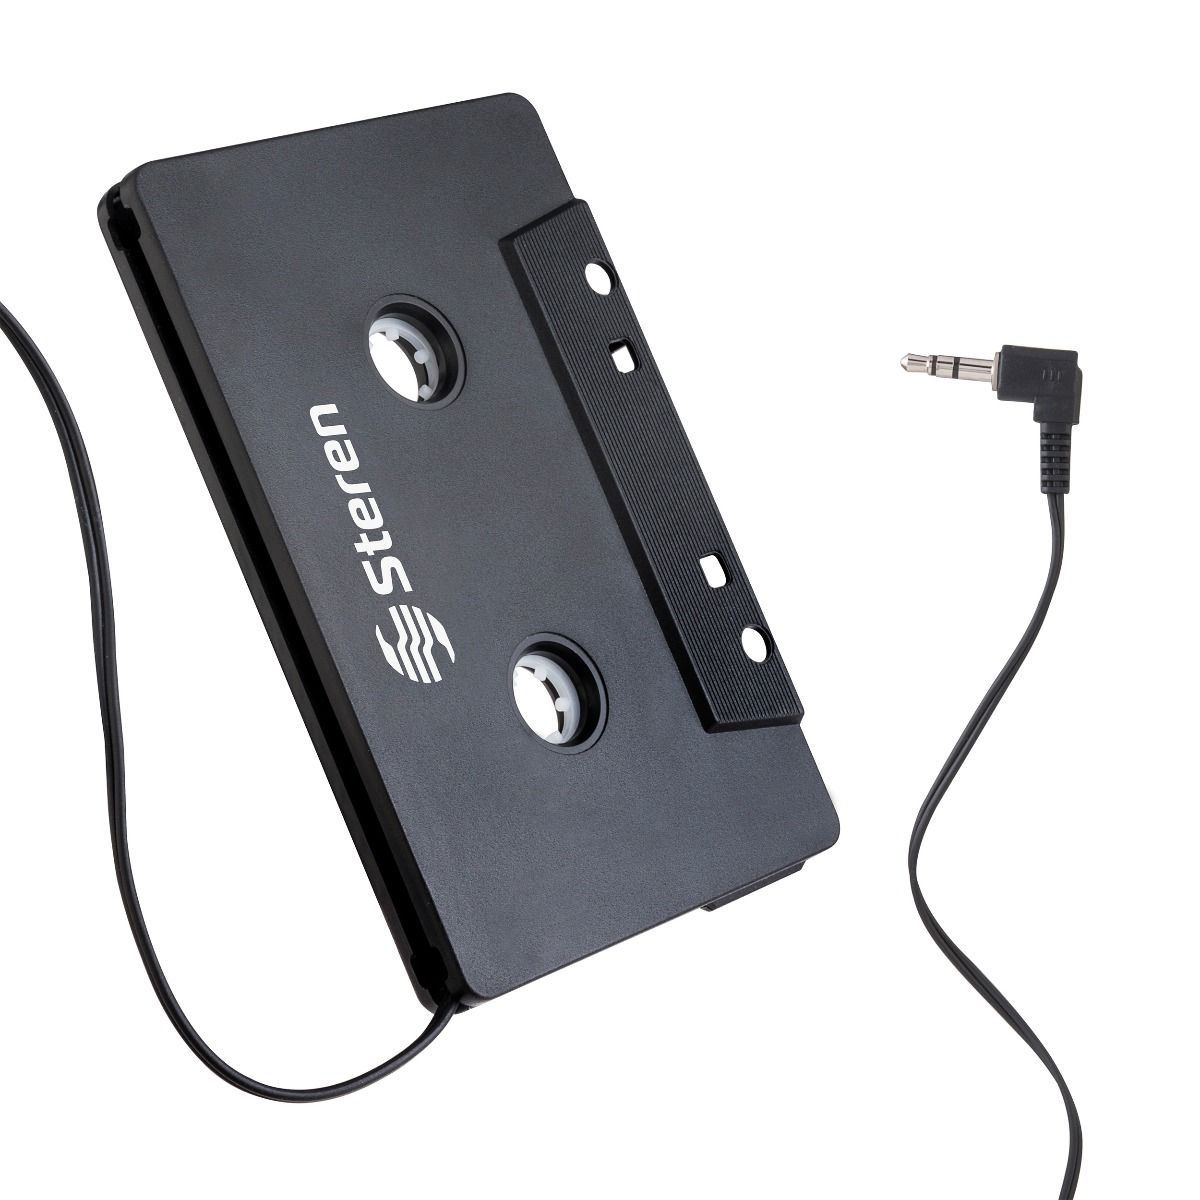 Adaptador de cassette Bluetooth, Cinta de coche reproductor de cassette